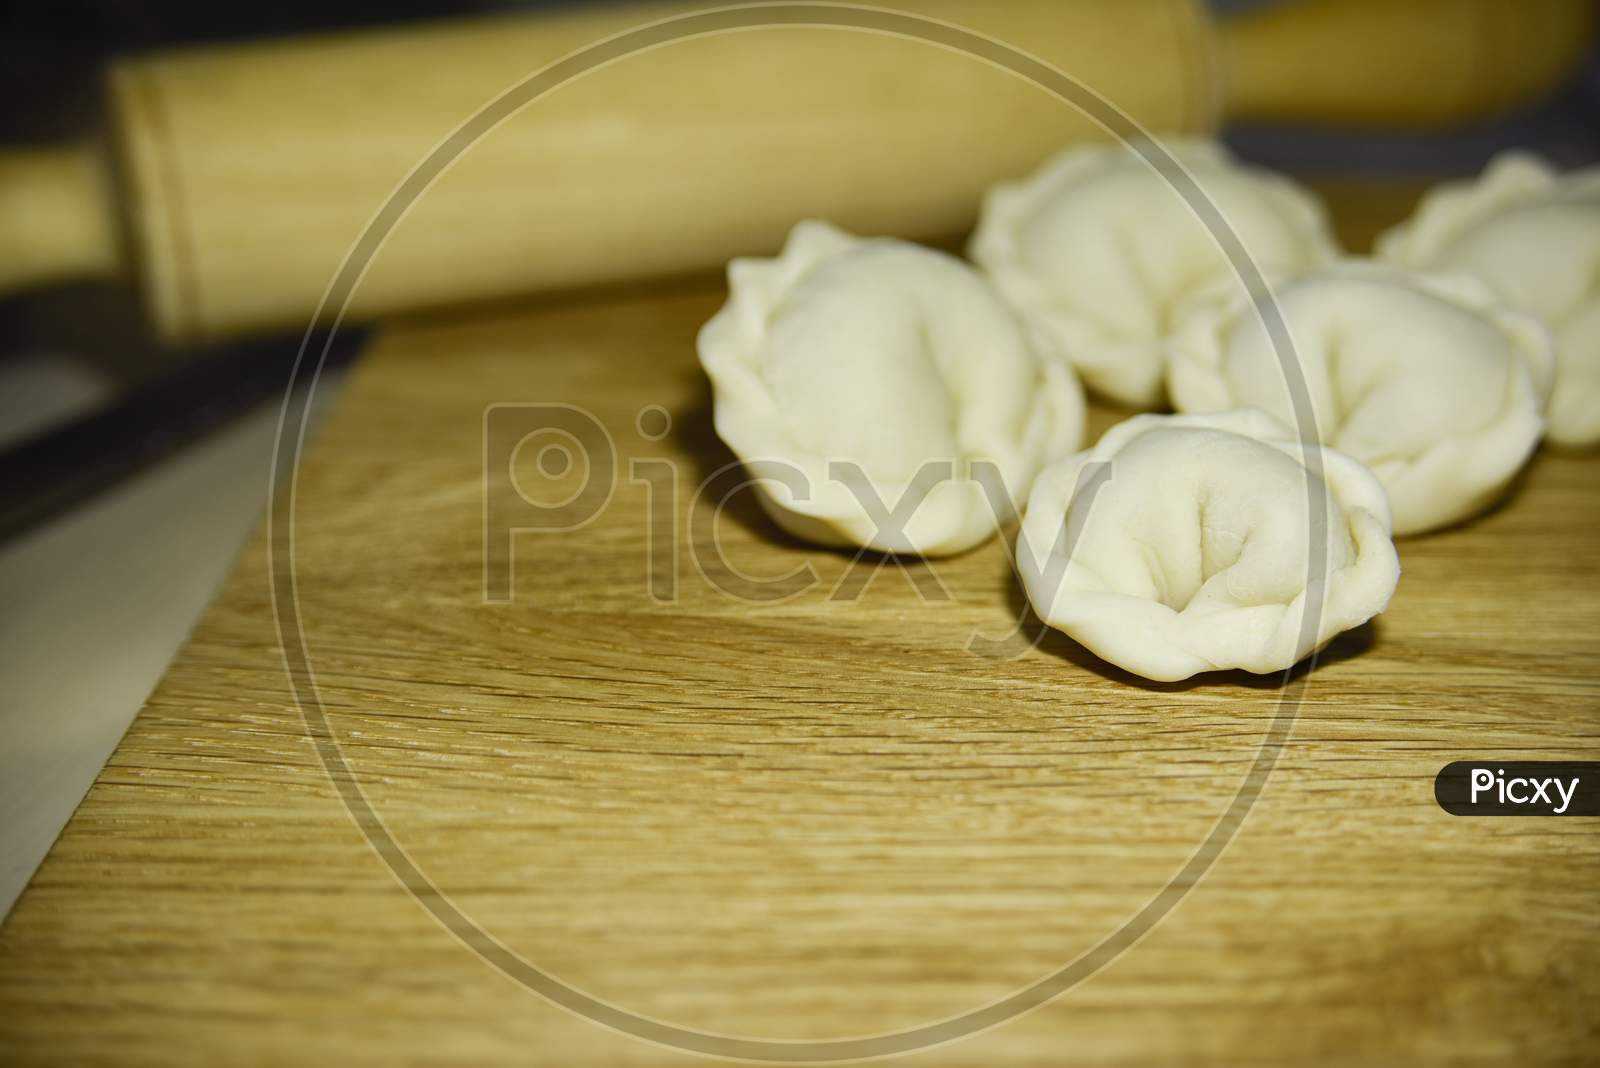 Five Dumplings Of Round Shape On The Wooden Deck. Selective Focus.